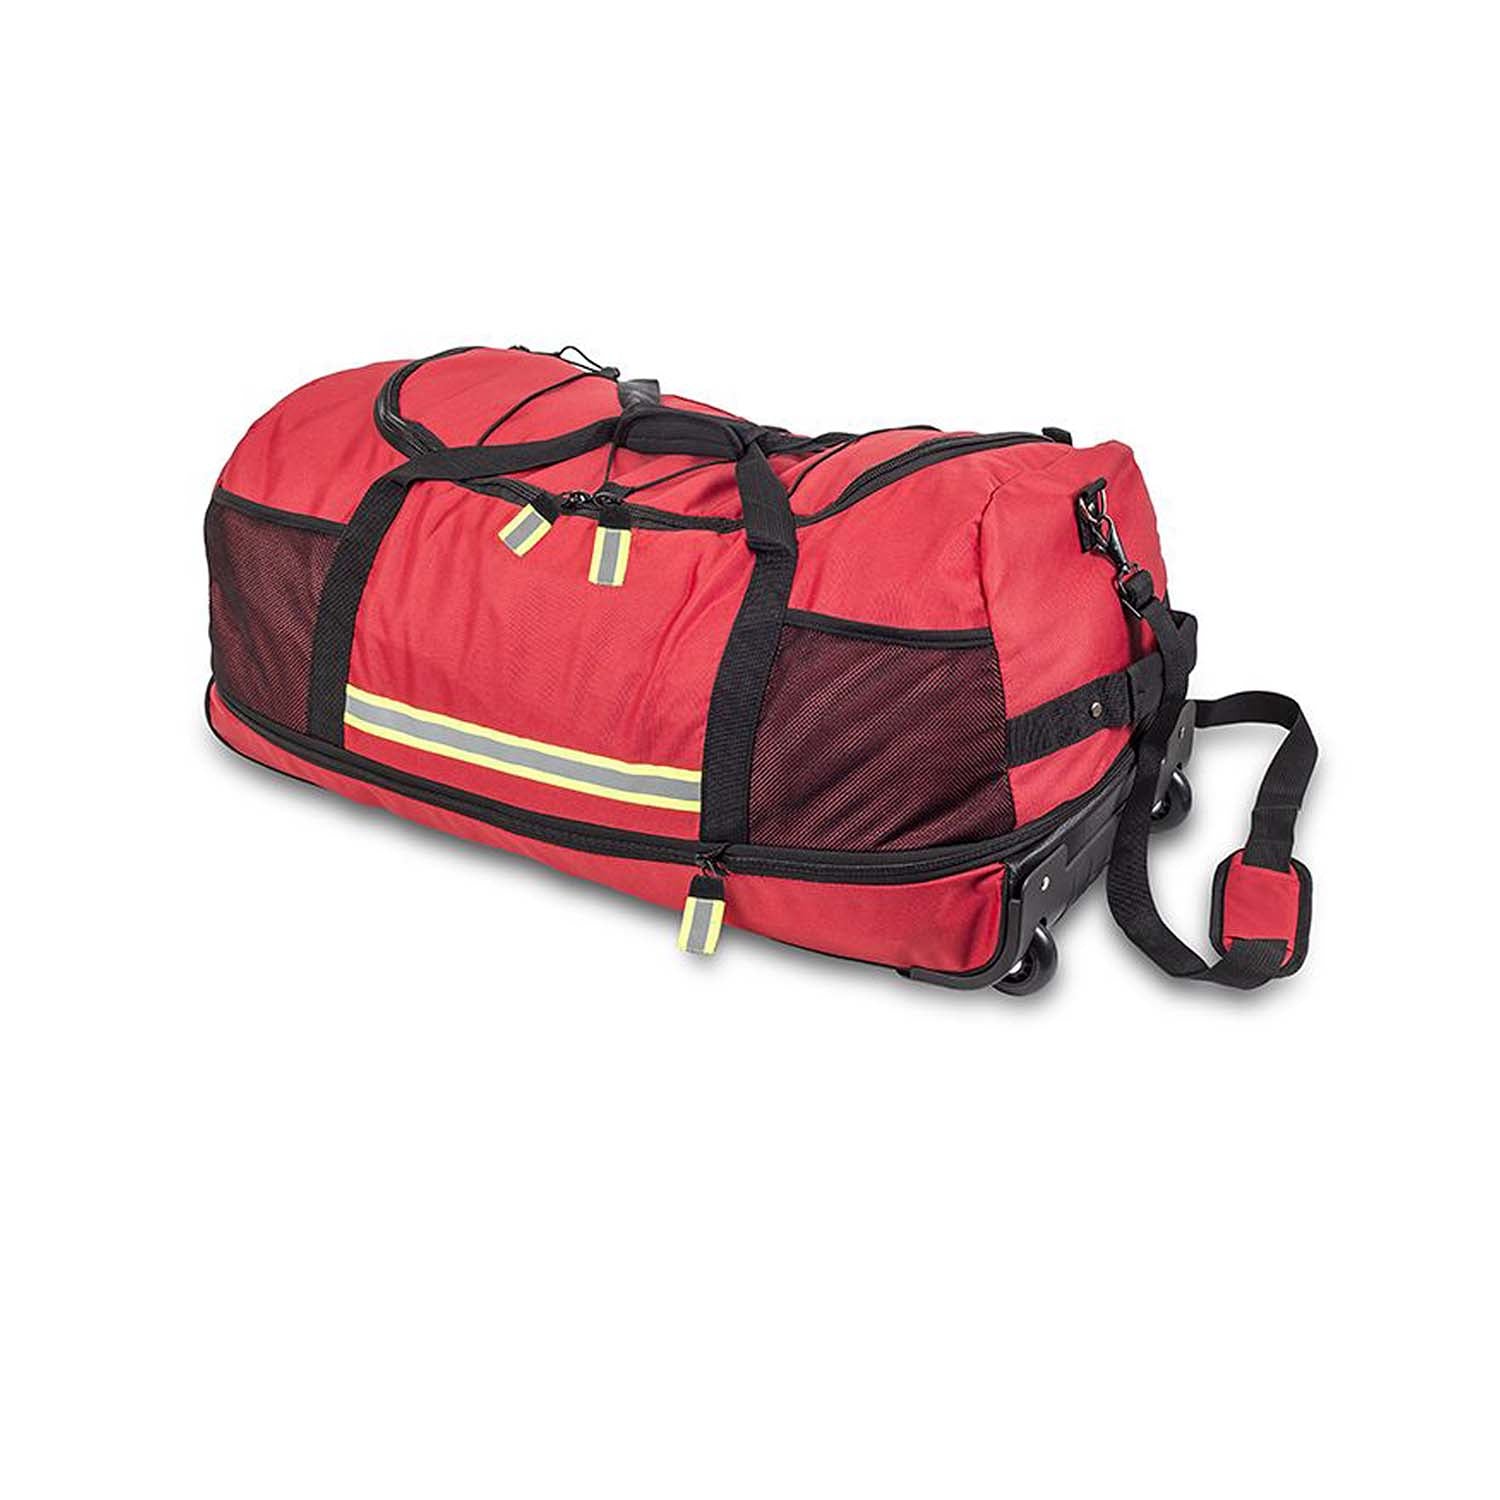 Roll & Fight's Firefighter's Bag (4)